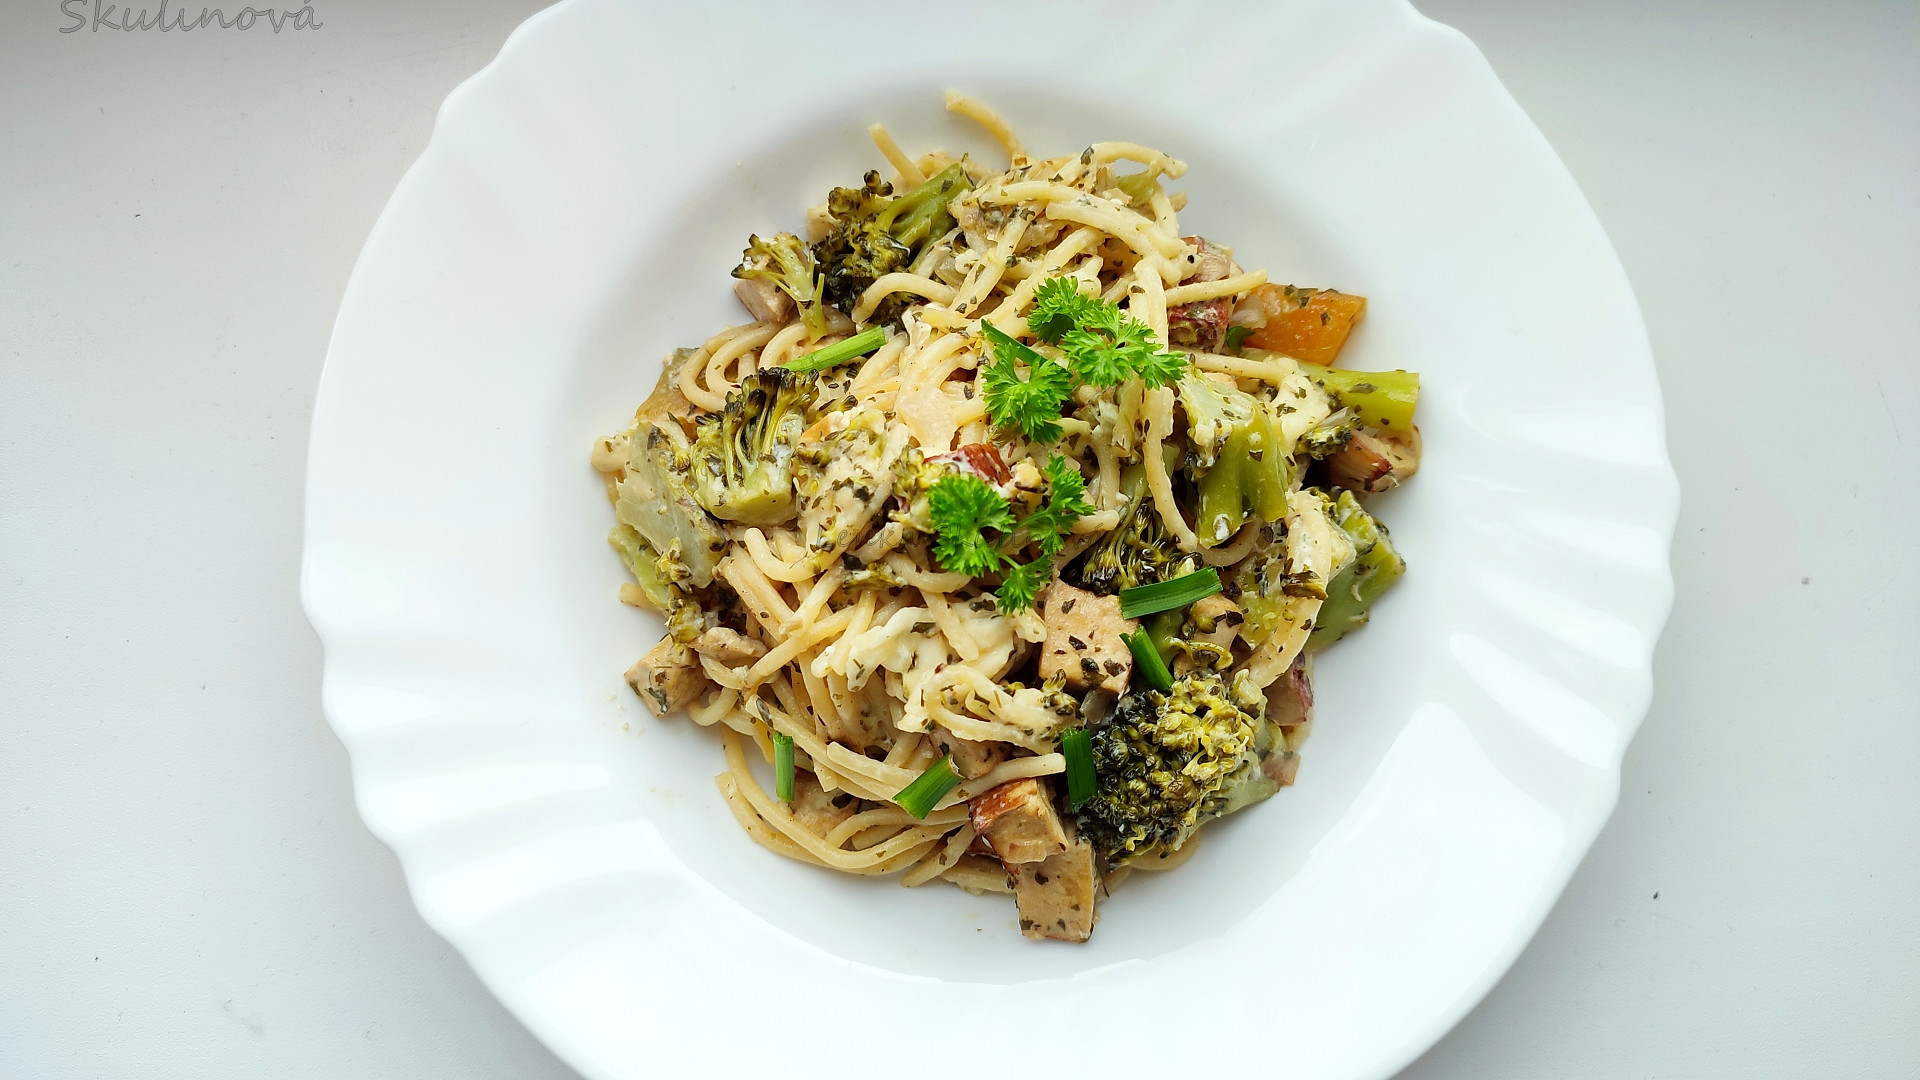 Špagety s tofu a brokolicí